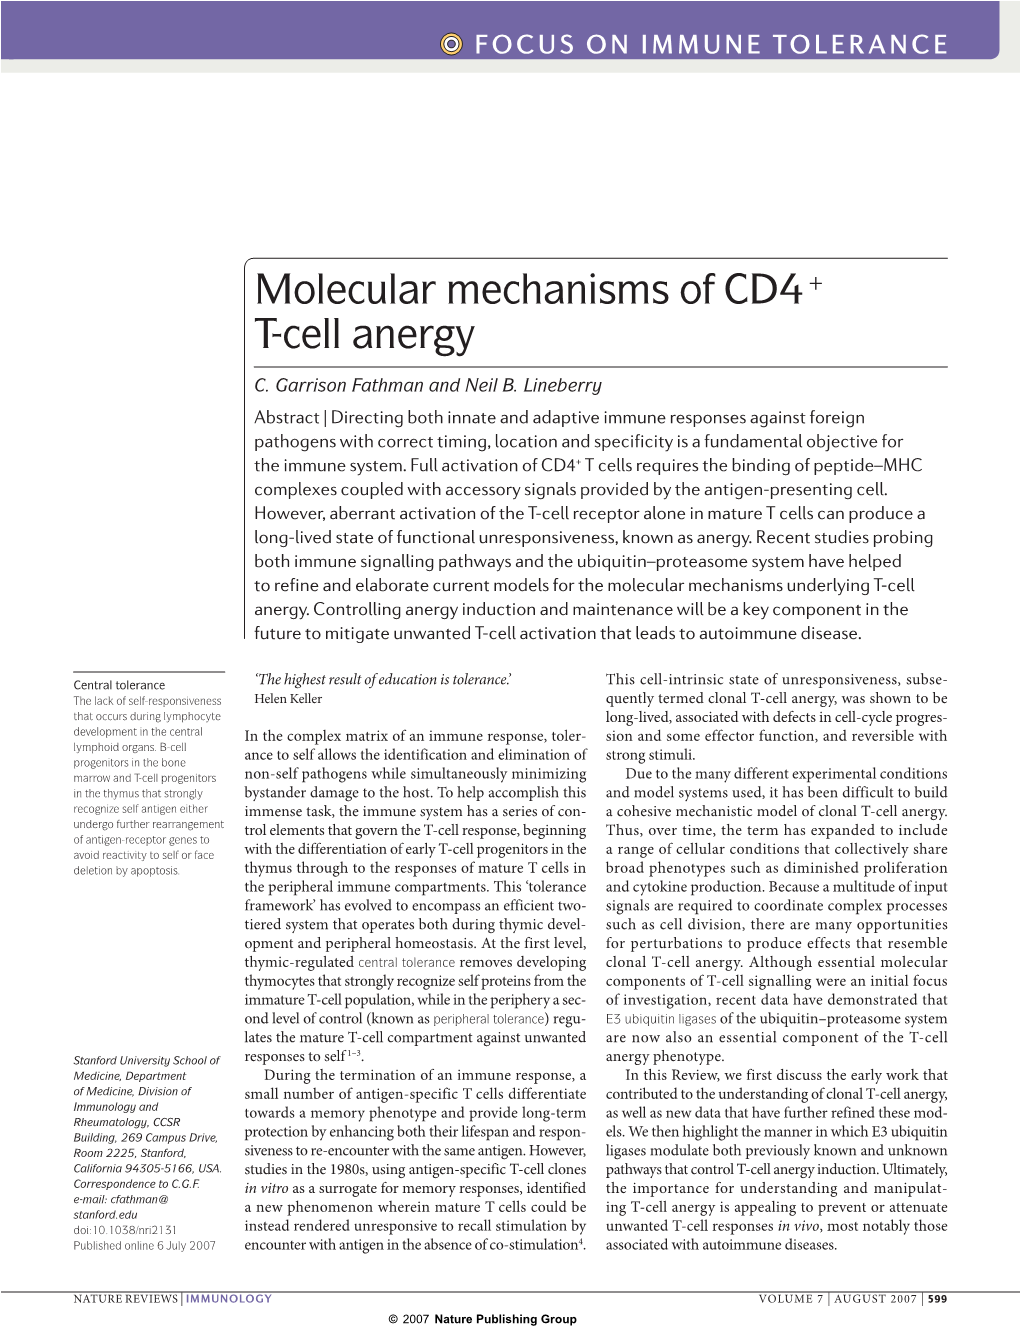 Molecular Mechanisms of CD4+ T-Cell Anergy